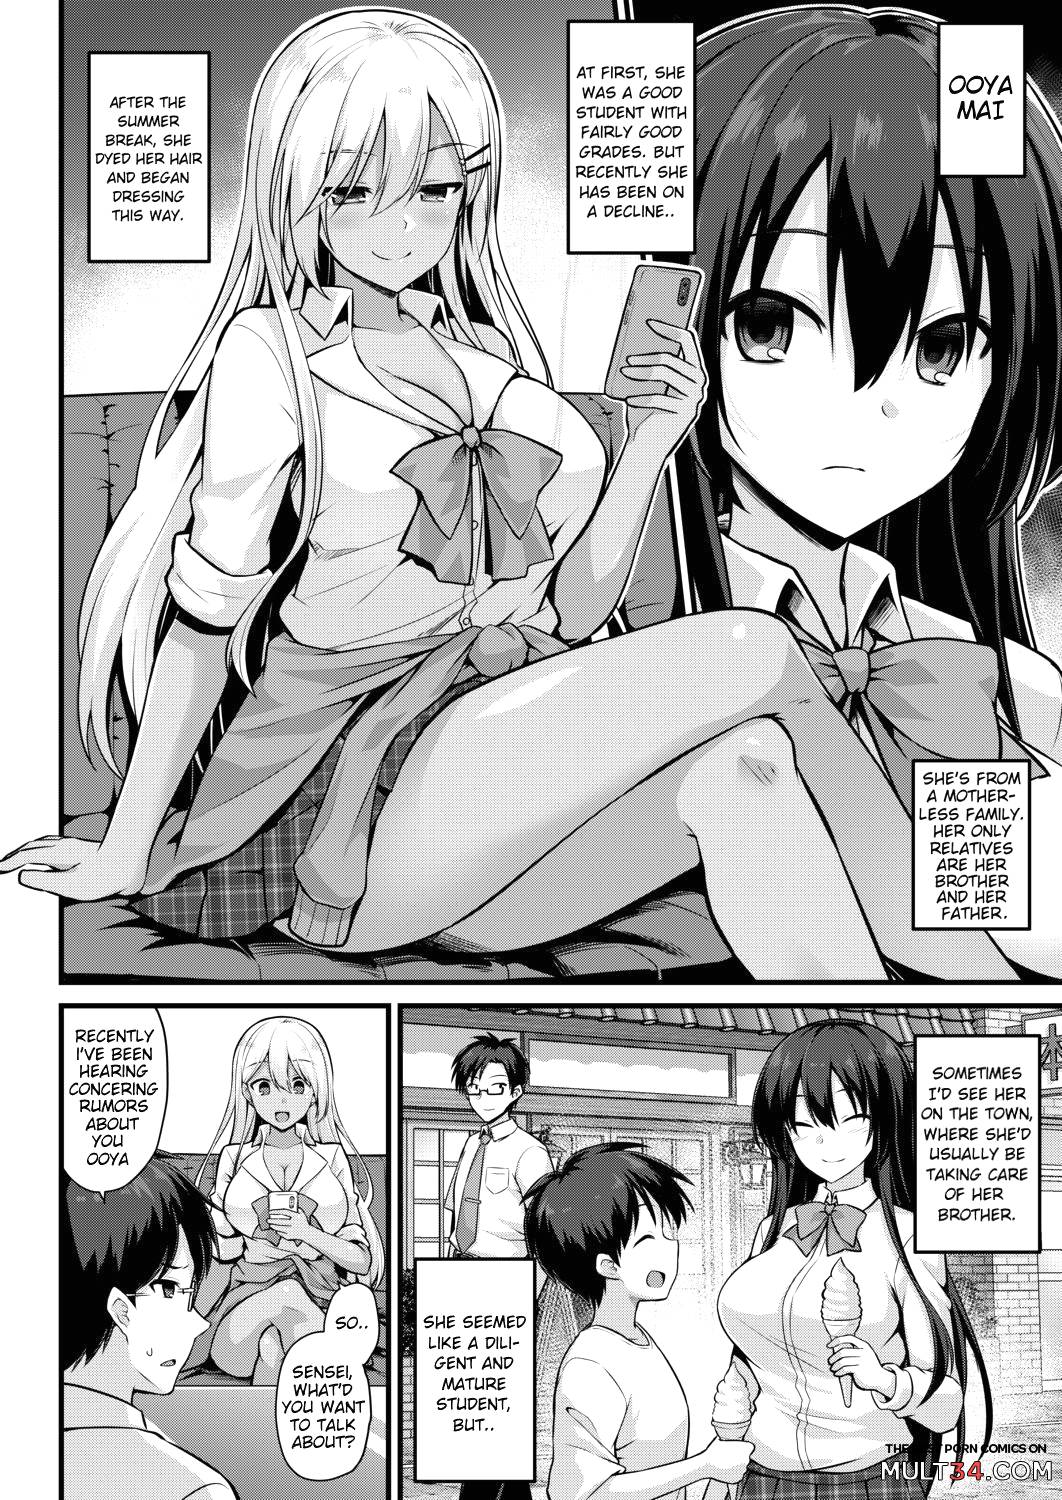 Ooya-chan's Teacher Training page 2